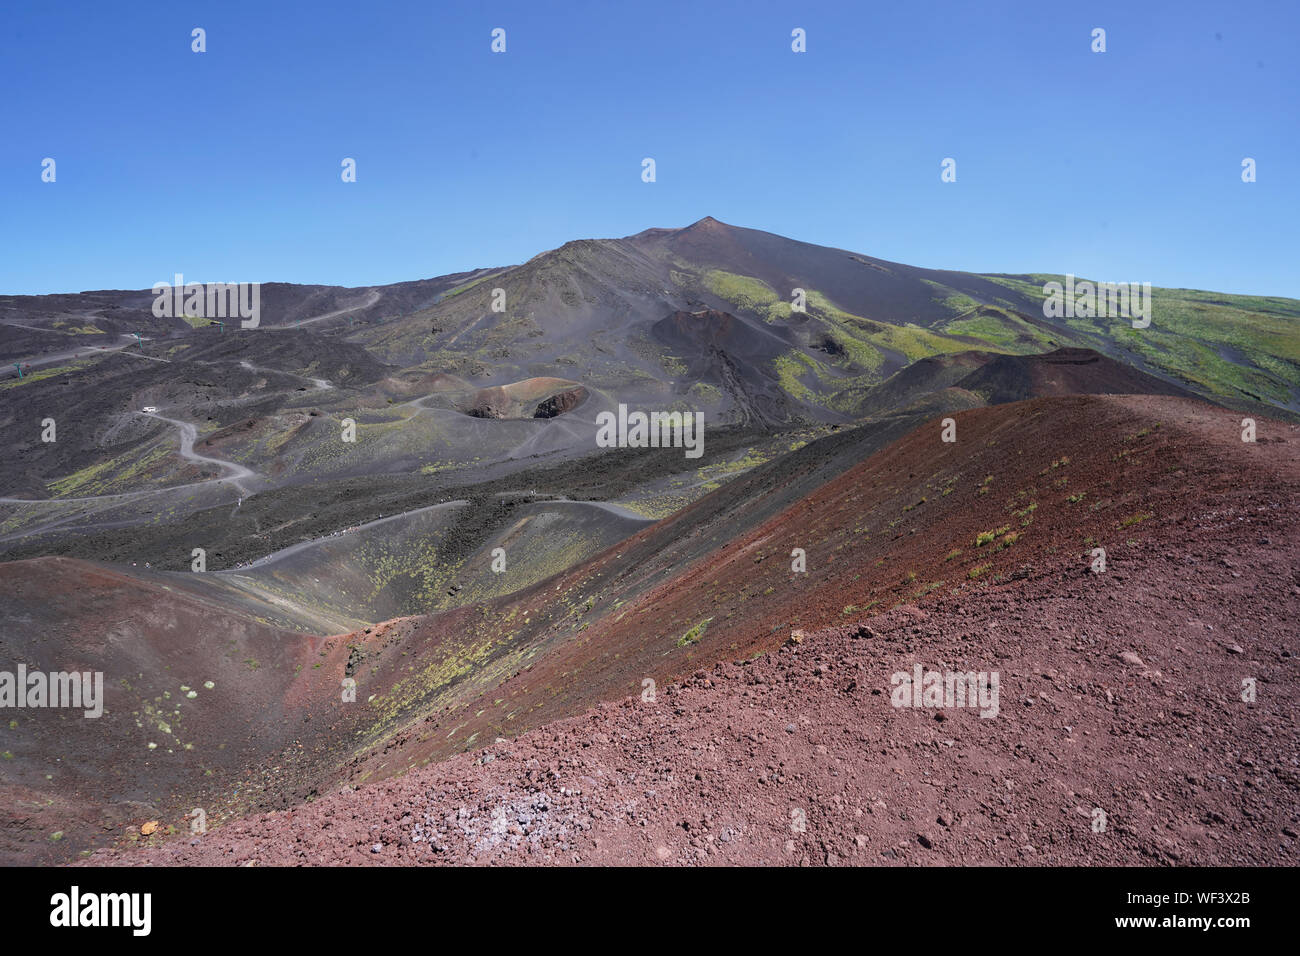 Ausblick auf den Mt. Ätna, dem größten aktiven Vulkan Europas, Sizilien, Italien Stockfoto